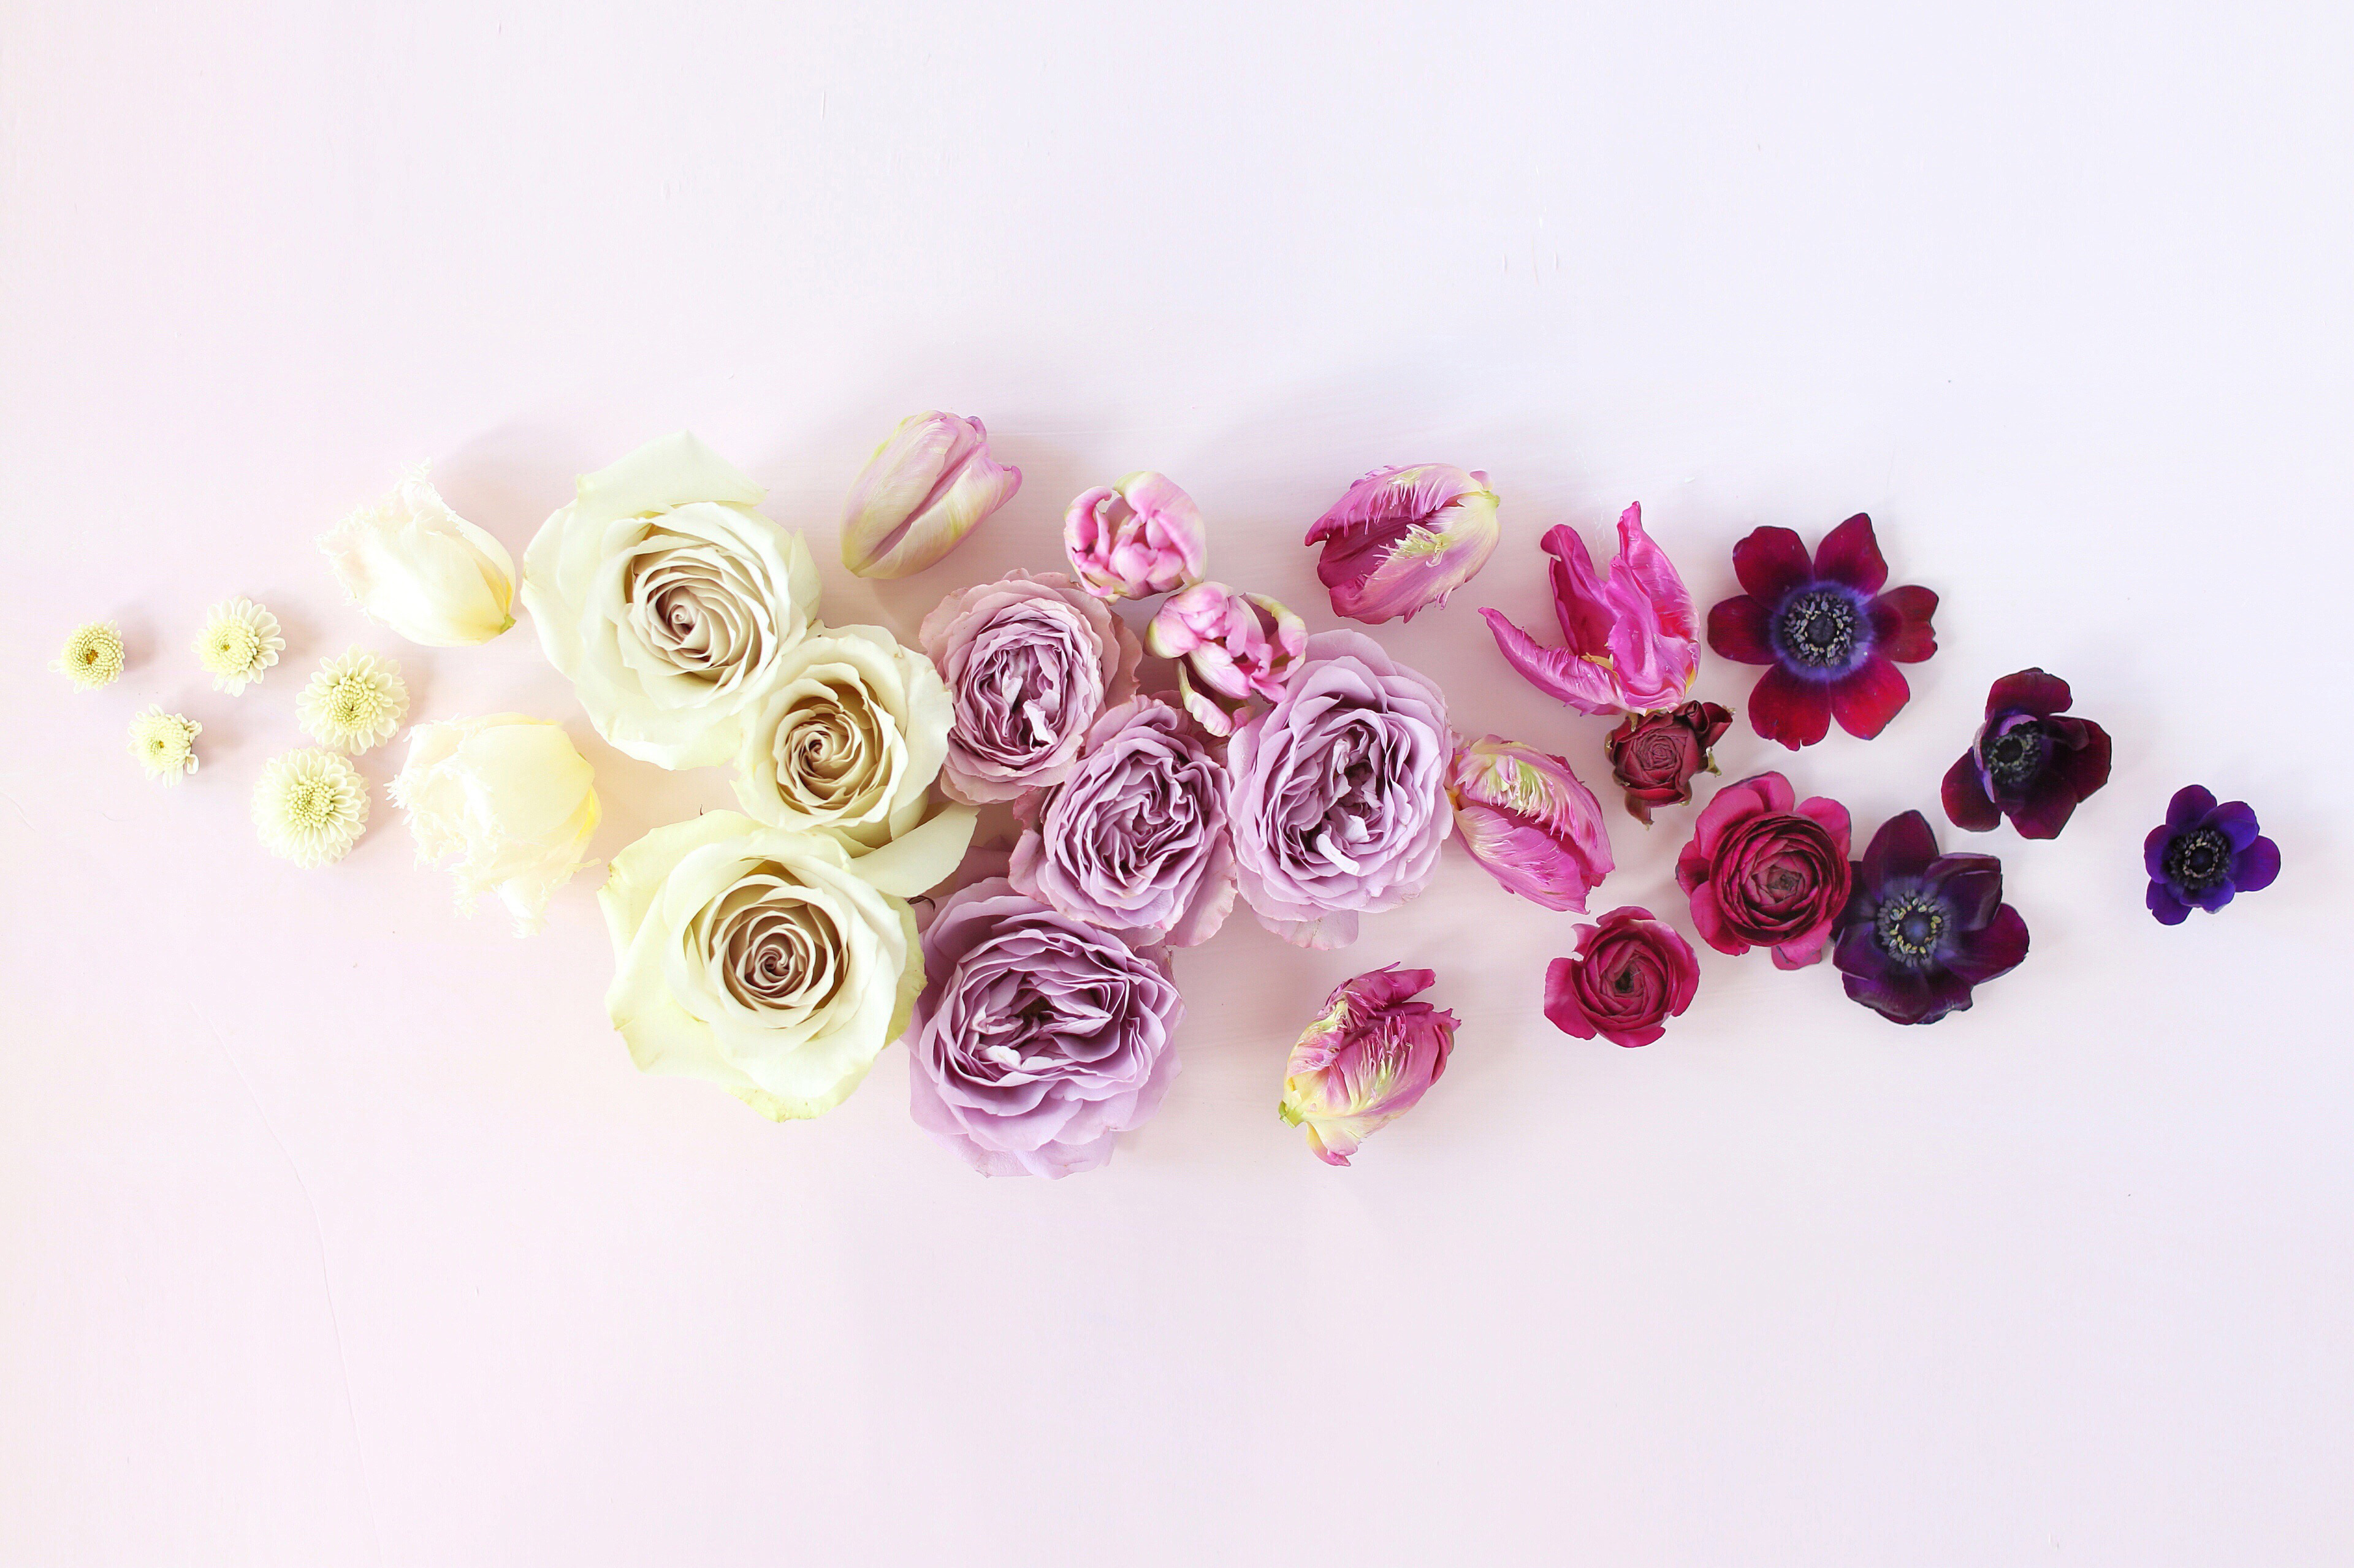 Digital Blooms March 2018 | Free Pantone Inspired Desktop Wallpapers for Spring | Free Ombre Lavender Floral Tech Wallpapers | Design 1 // JustineCelina.com x Rebecca Dawn Design